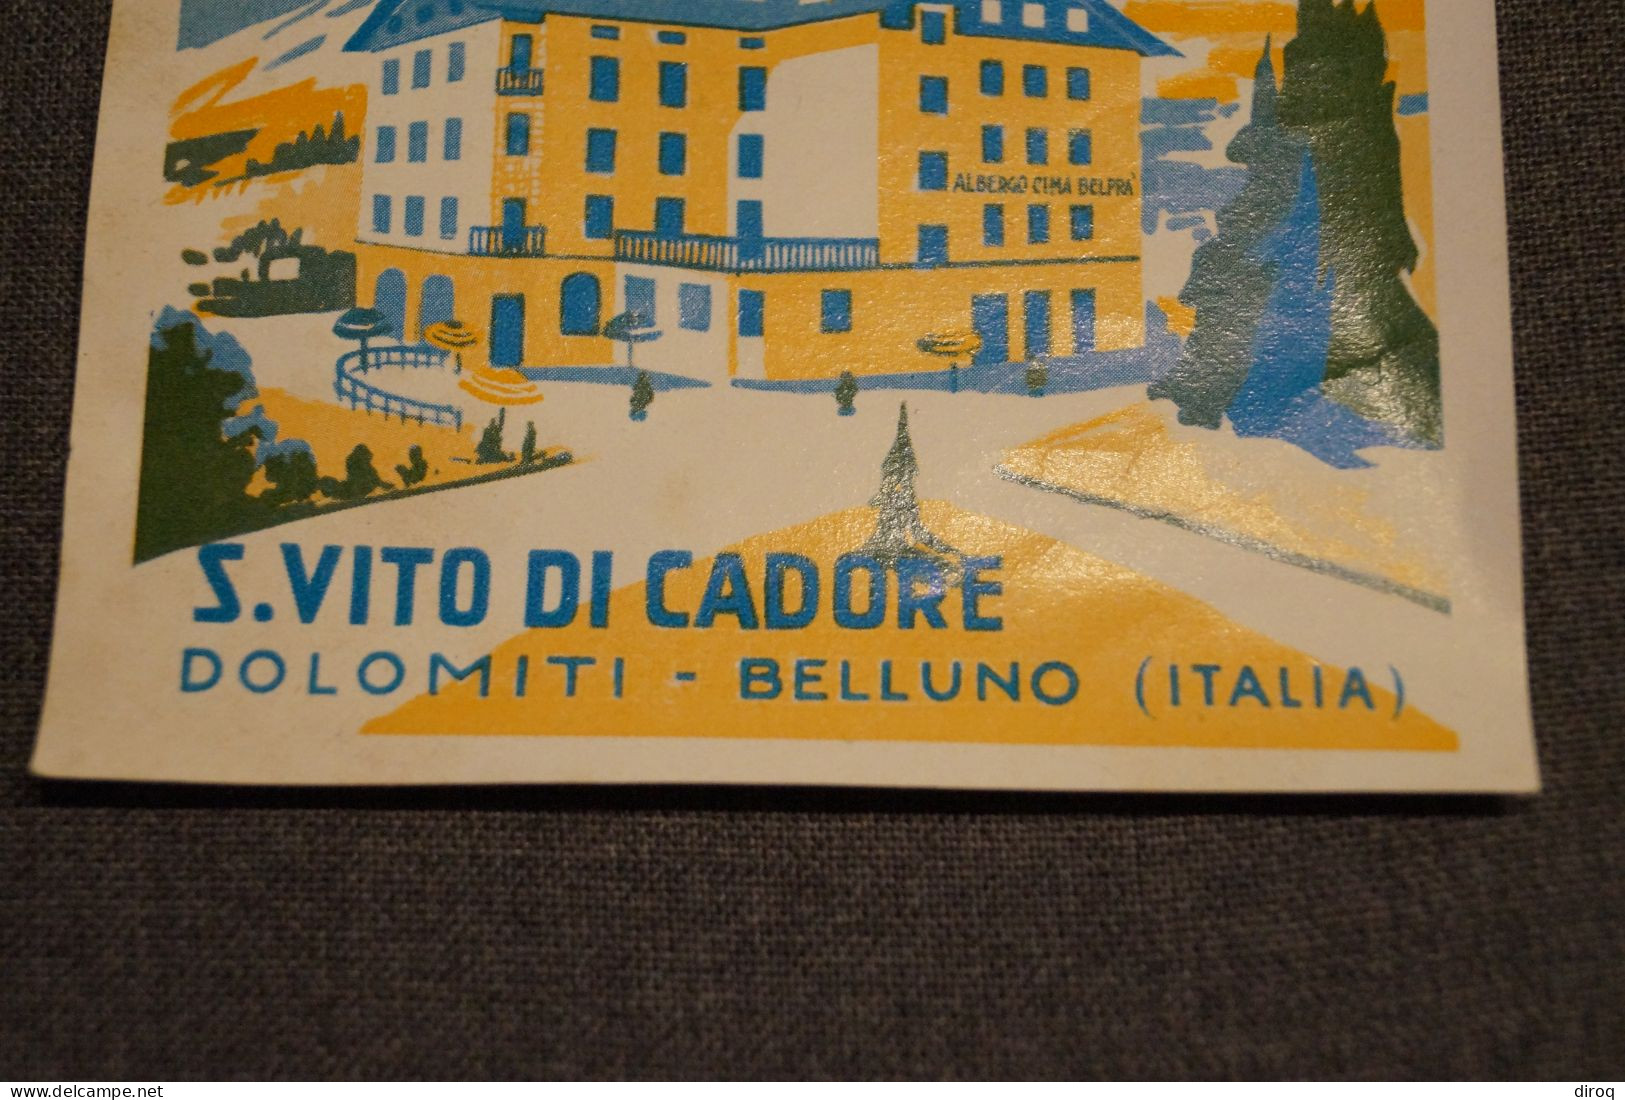 Belle Ancienne Petite Affiche Originale,Italie,Albergo Cima Belpra,Dolomiti - Belluno,122 / 102 Mm. - Afiches